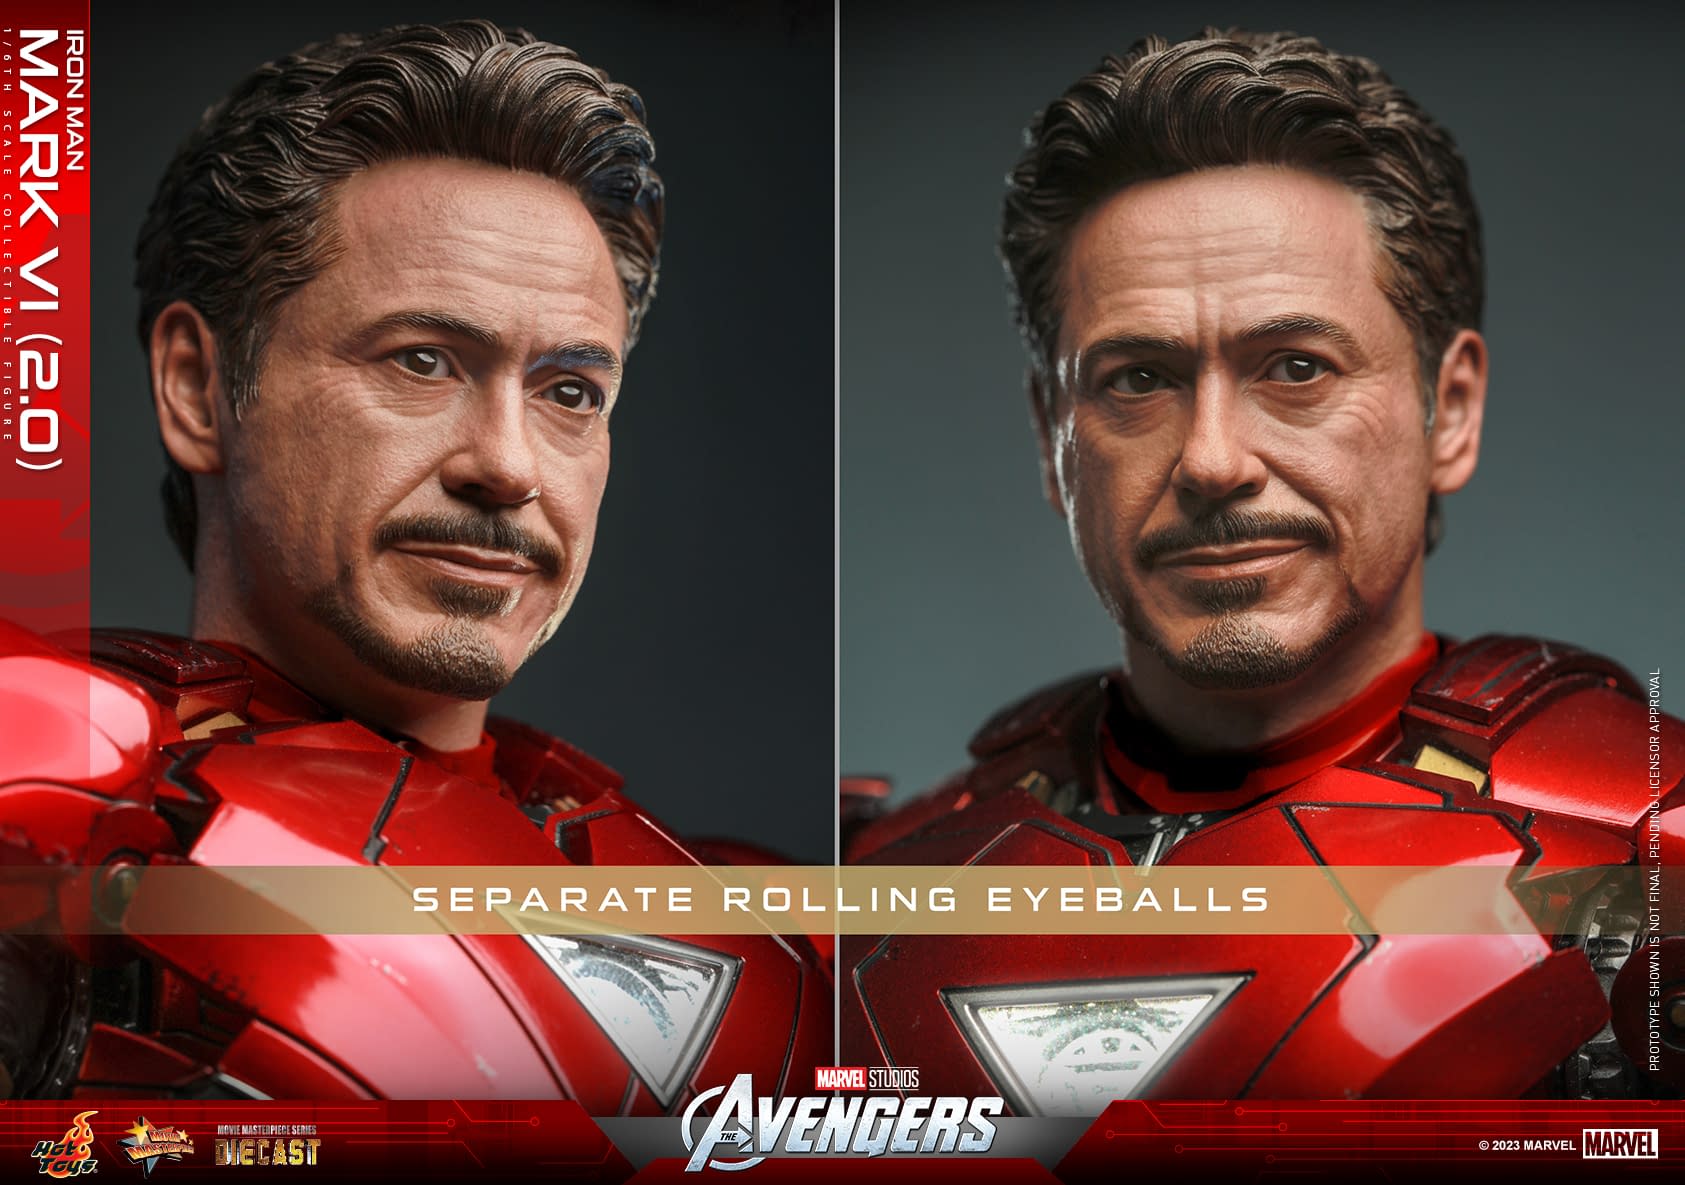 Hot Toys Debuts New The Avengers Iron Man Mark VI 2.0 Figure